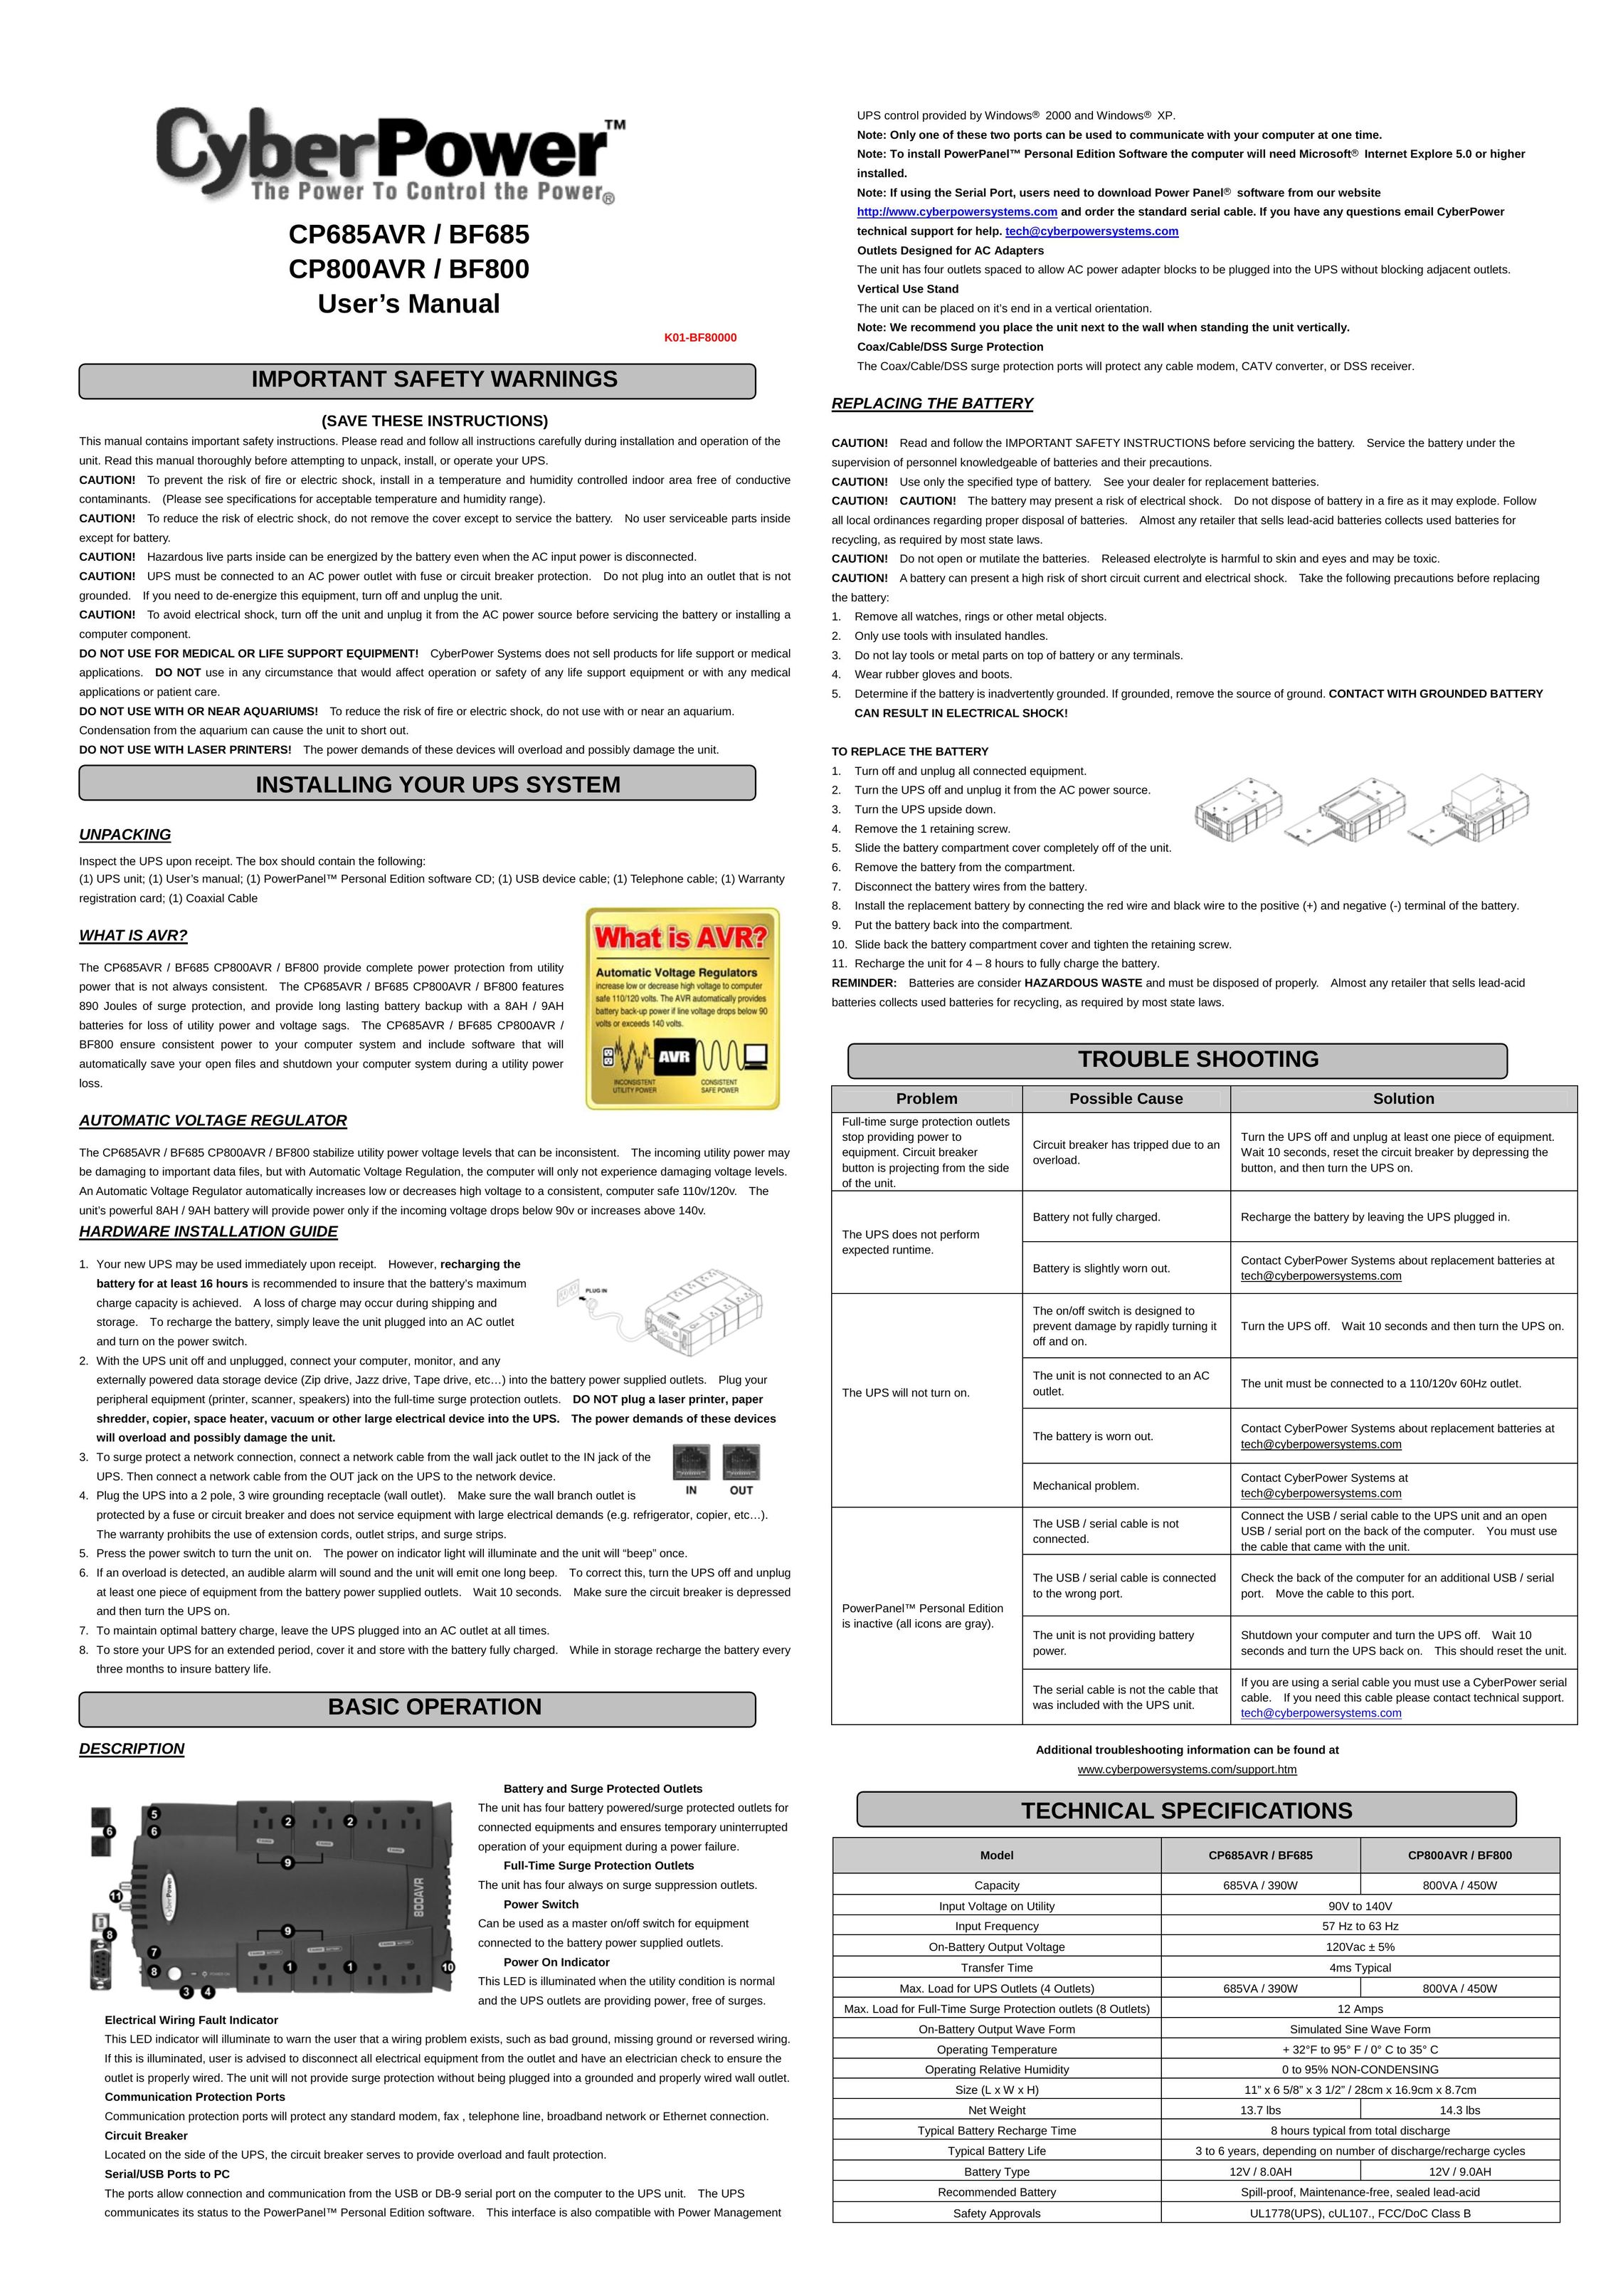 CyberPower CP800AVR / BF800 Power Supply User Manual